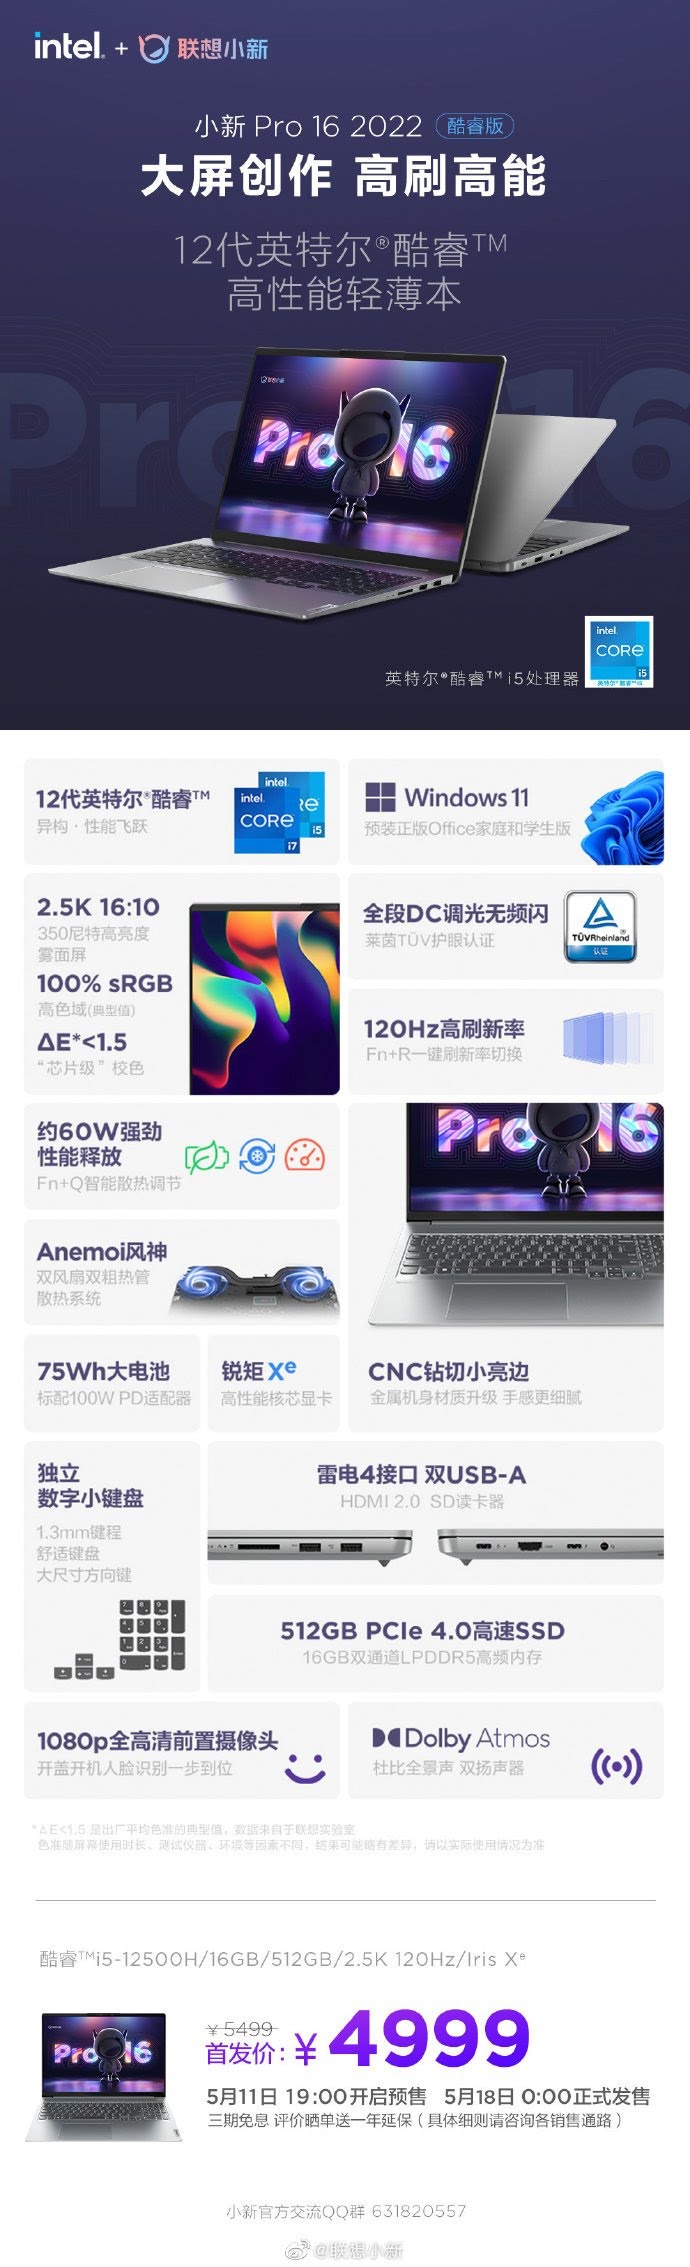 مواصفات لينوفو Xiaoxin Pro 16 للعام 2022